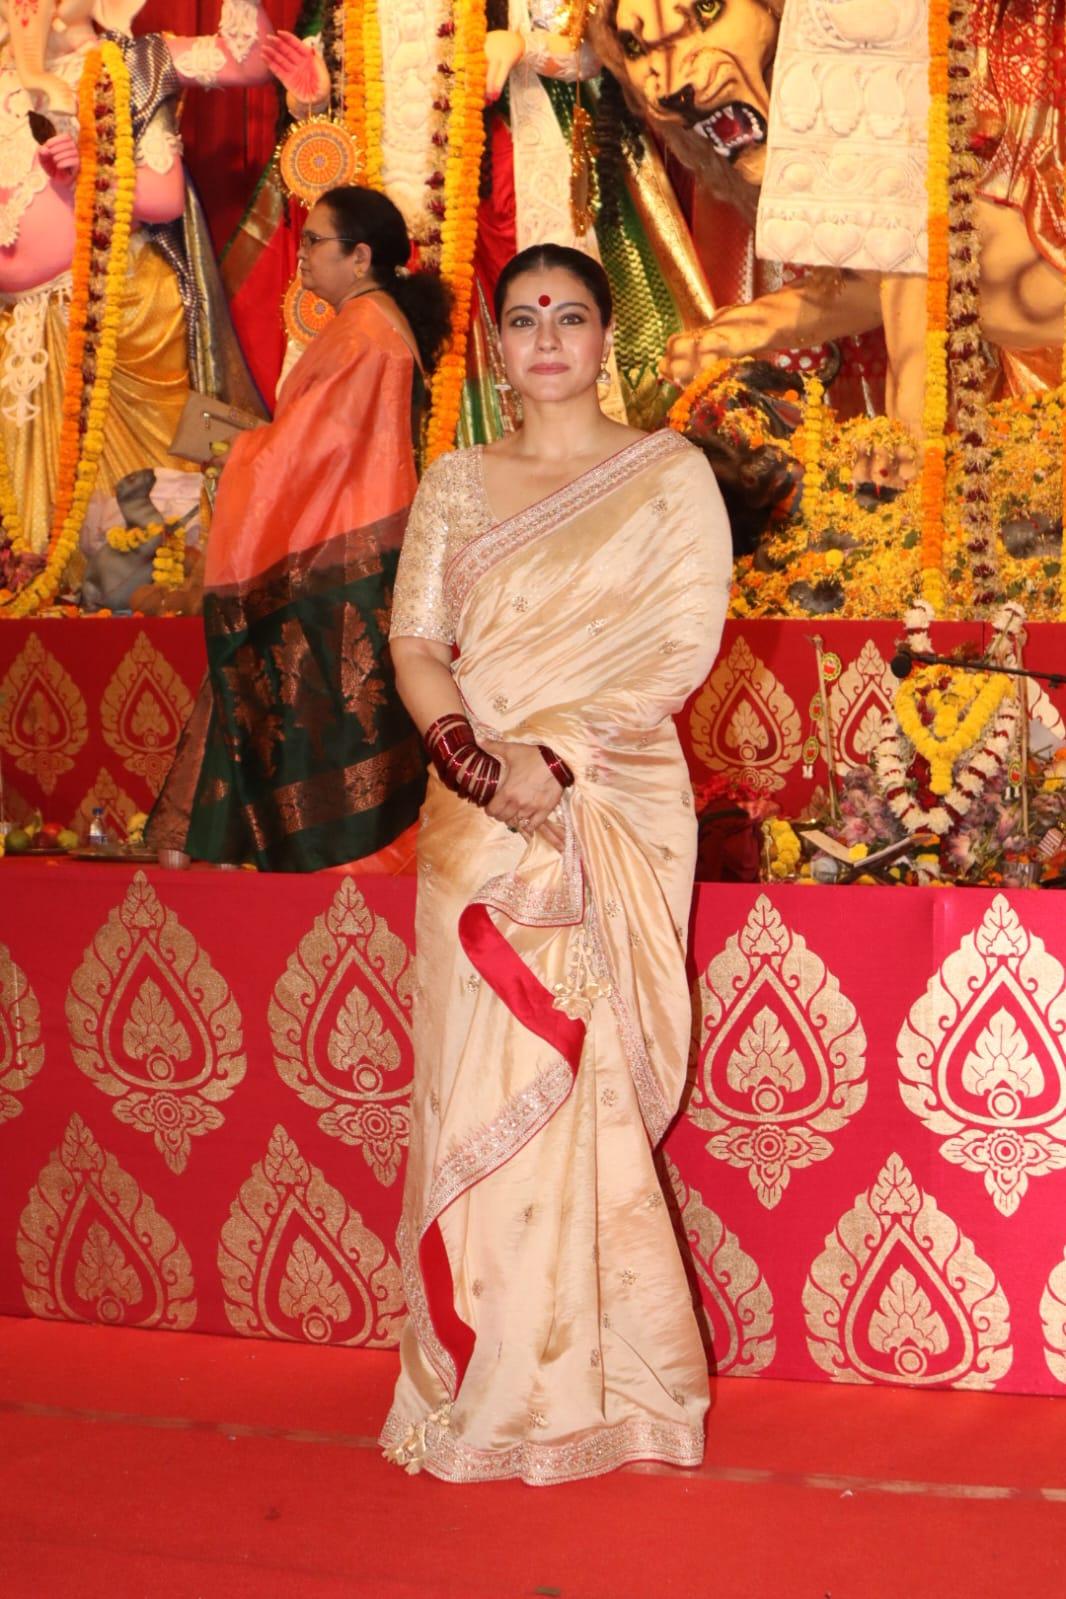 Kajol wore a stunning saree as she went to visit the pujo pandal in Juhu